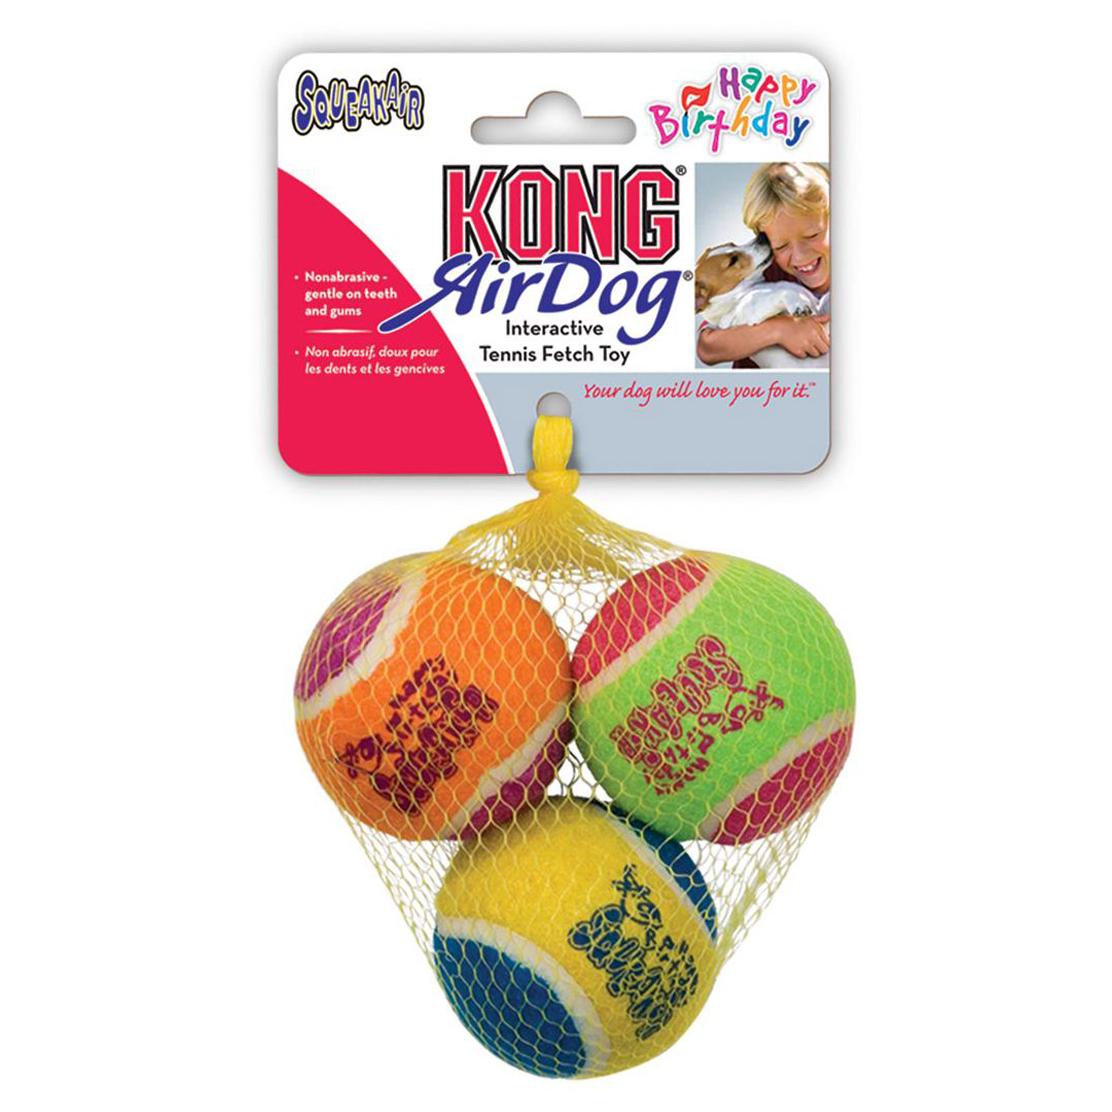 KONG AirDog Squeaker Birthday Balls Dog Toy